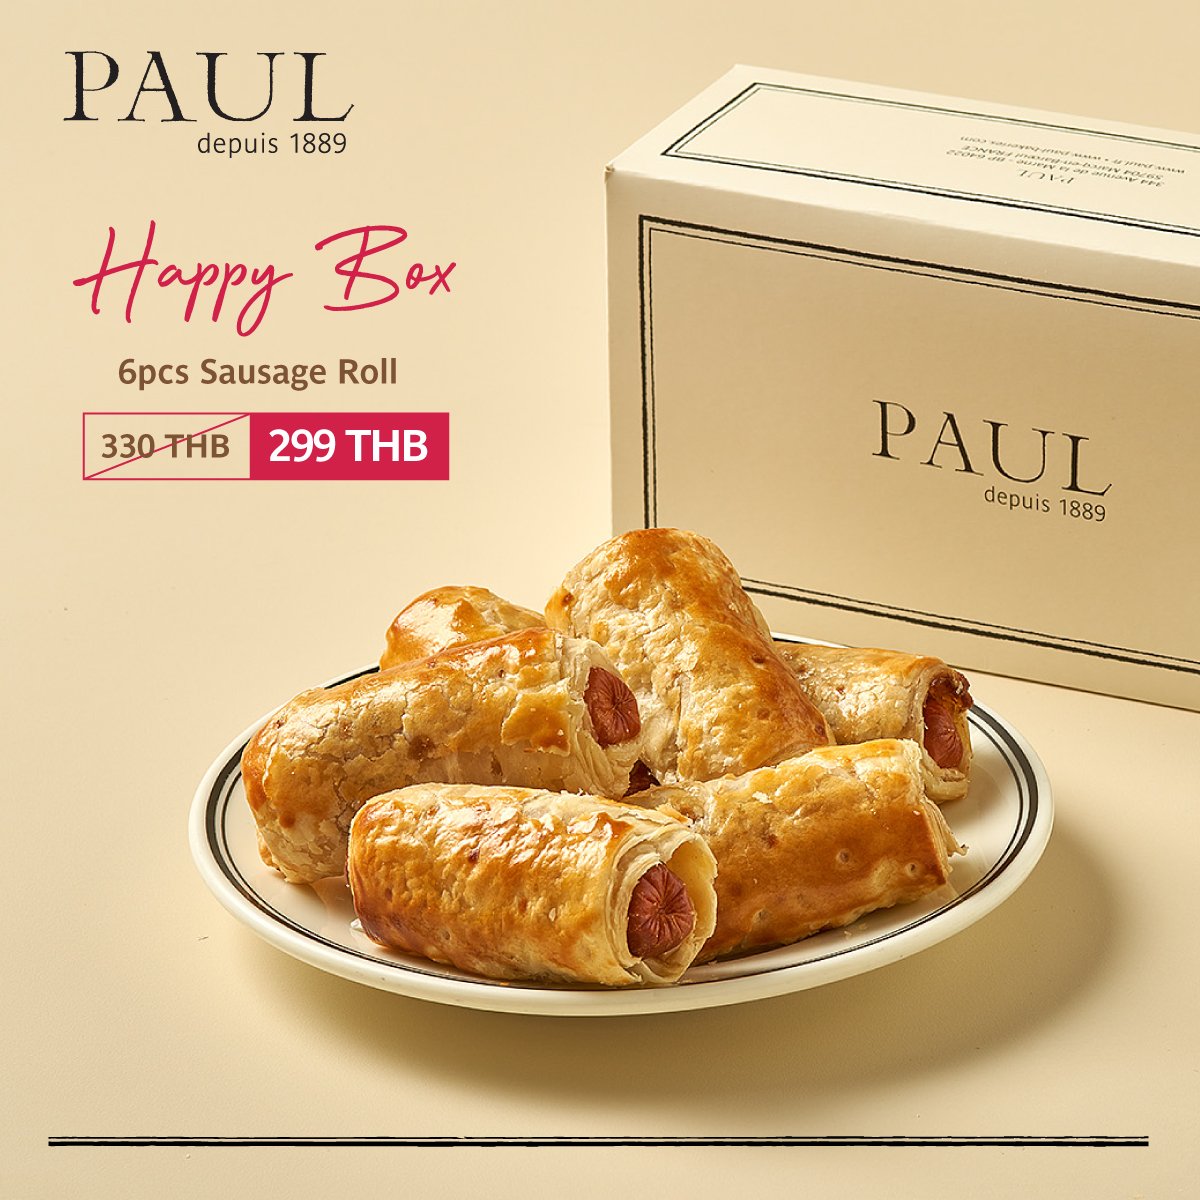 Happy Box-Sausage Roll (6 pcs)